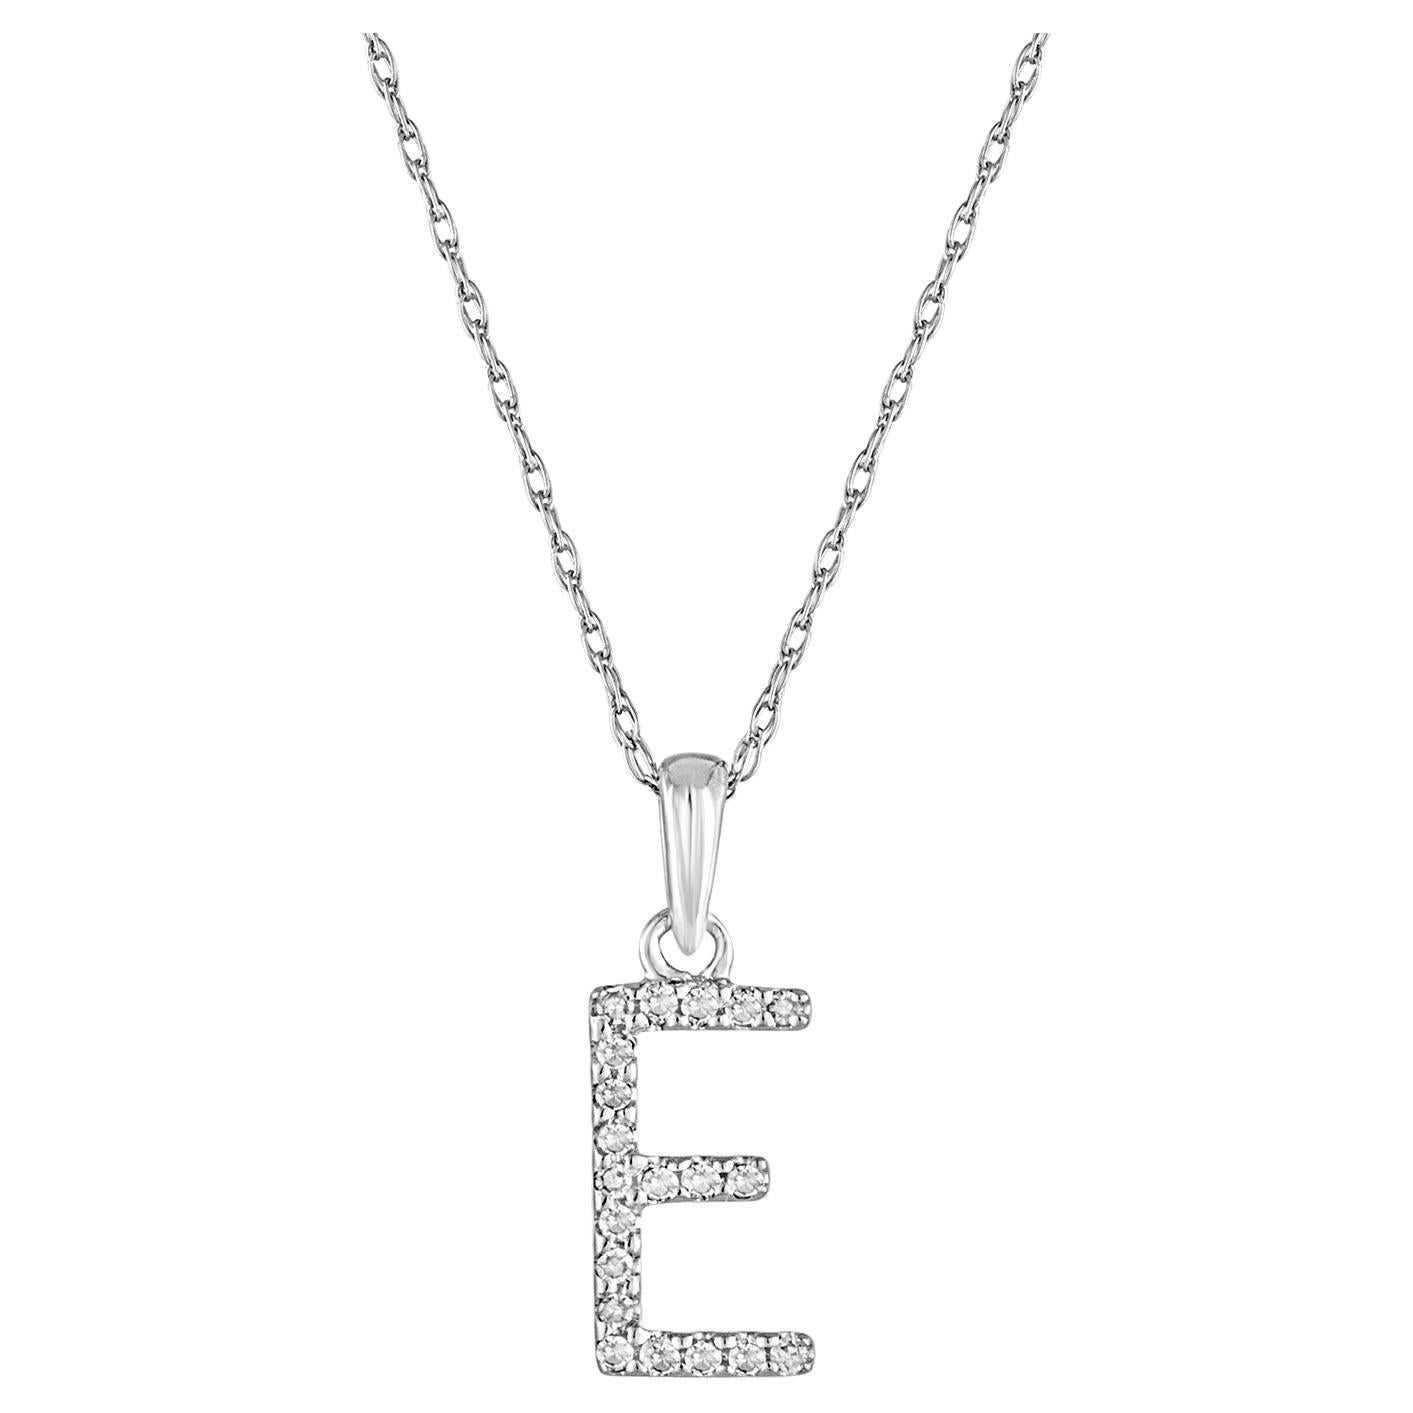 Collier pendentif en or blanc 14 carats avec diamants 0,06 carat, initial E